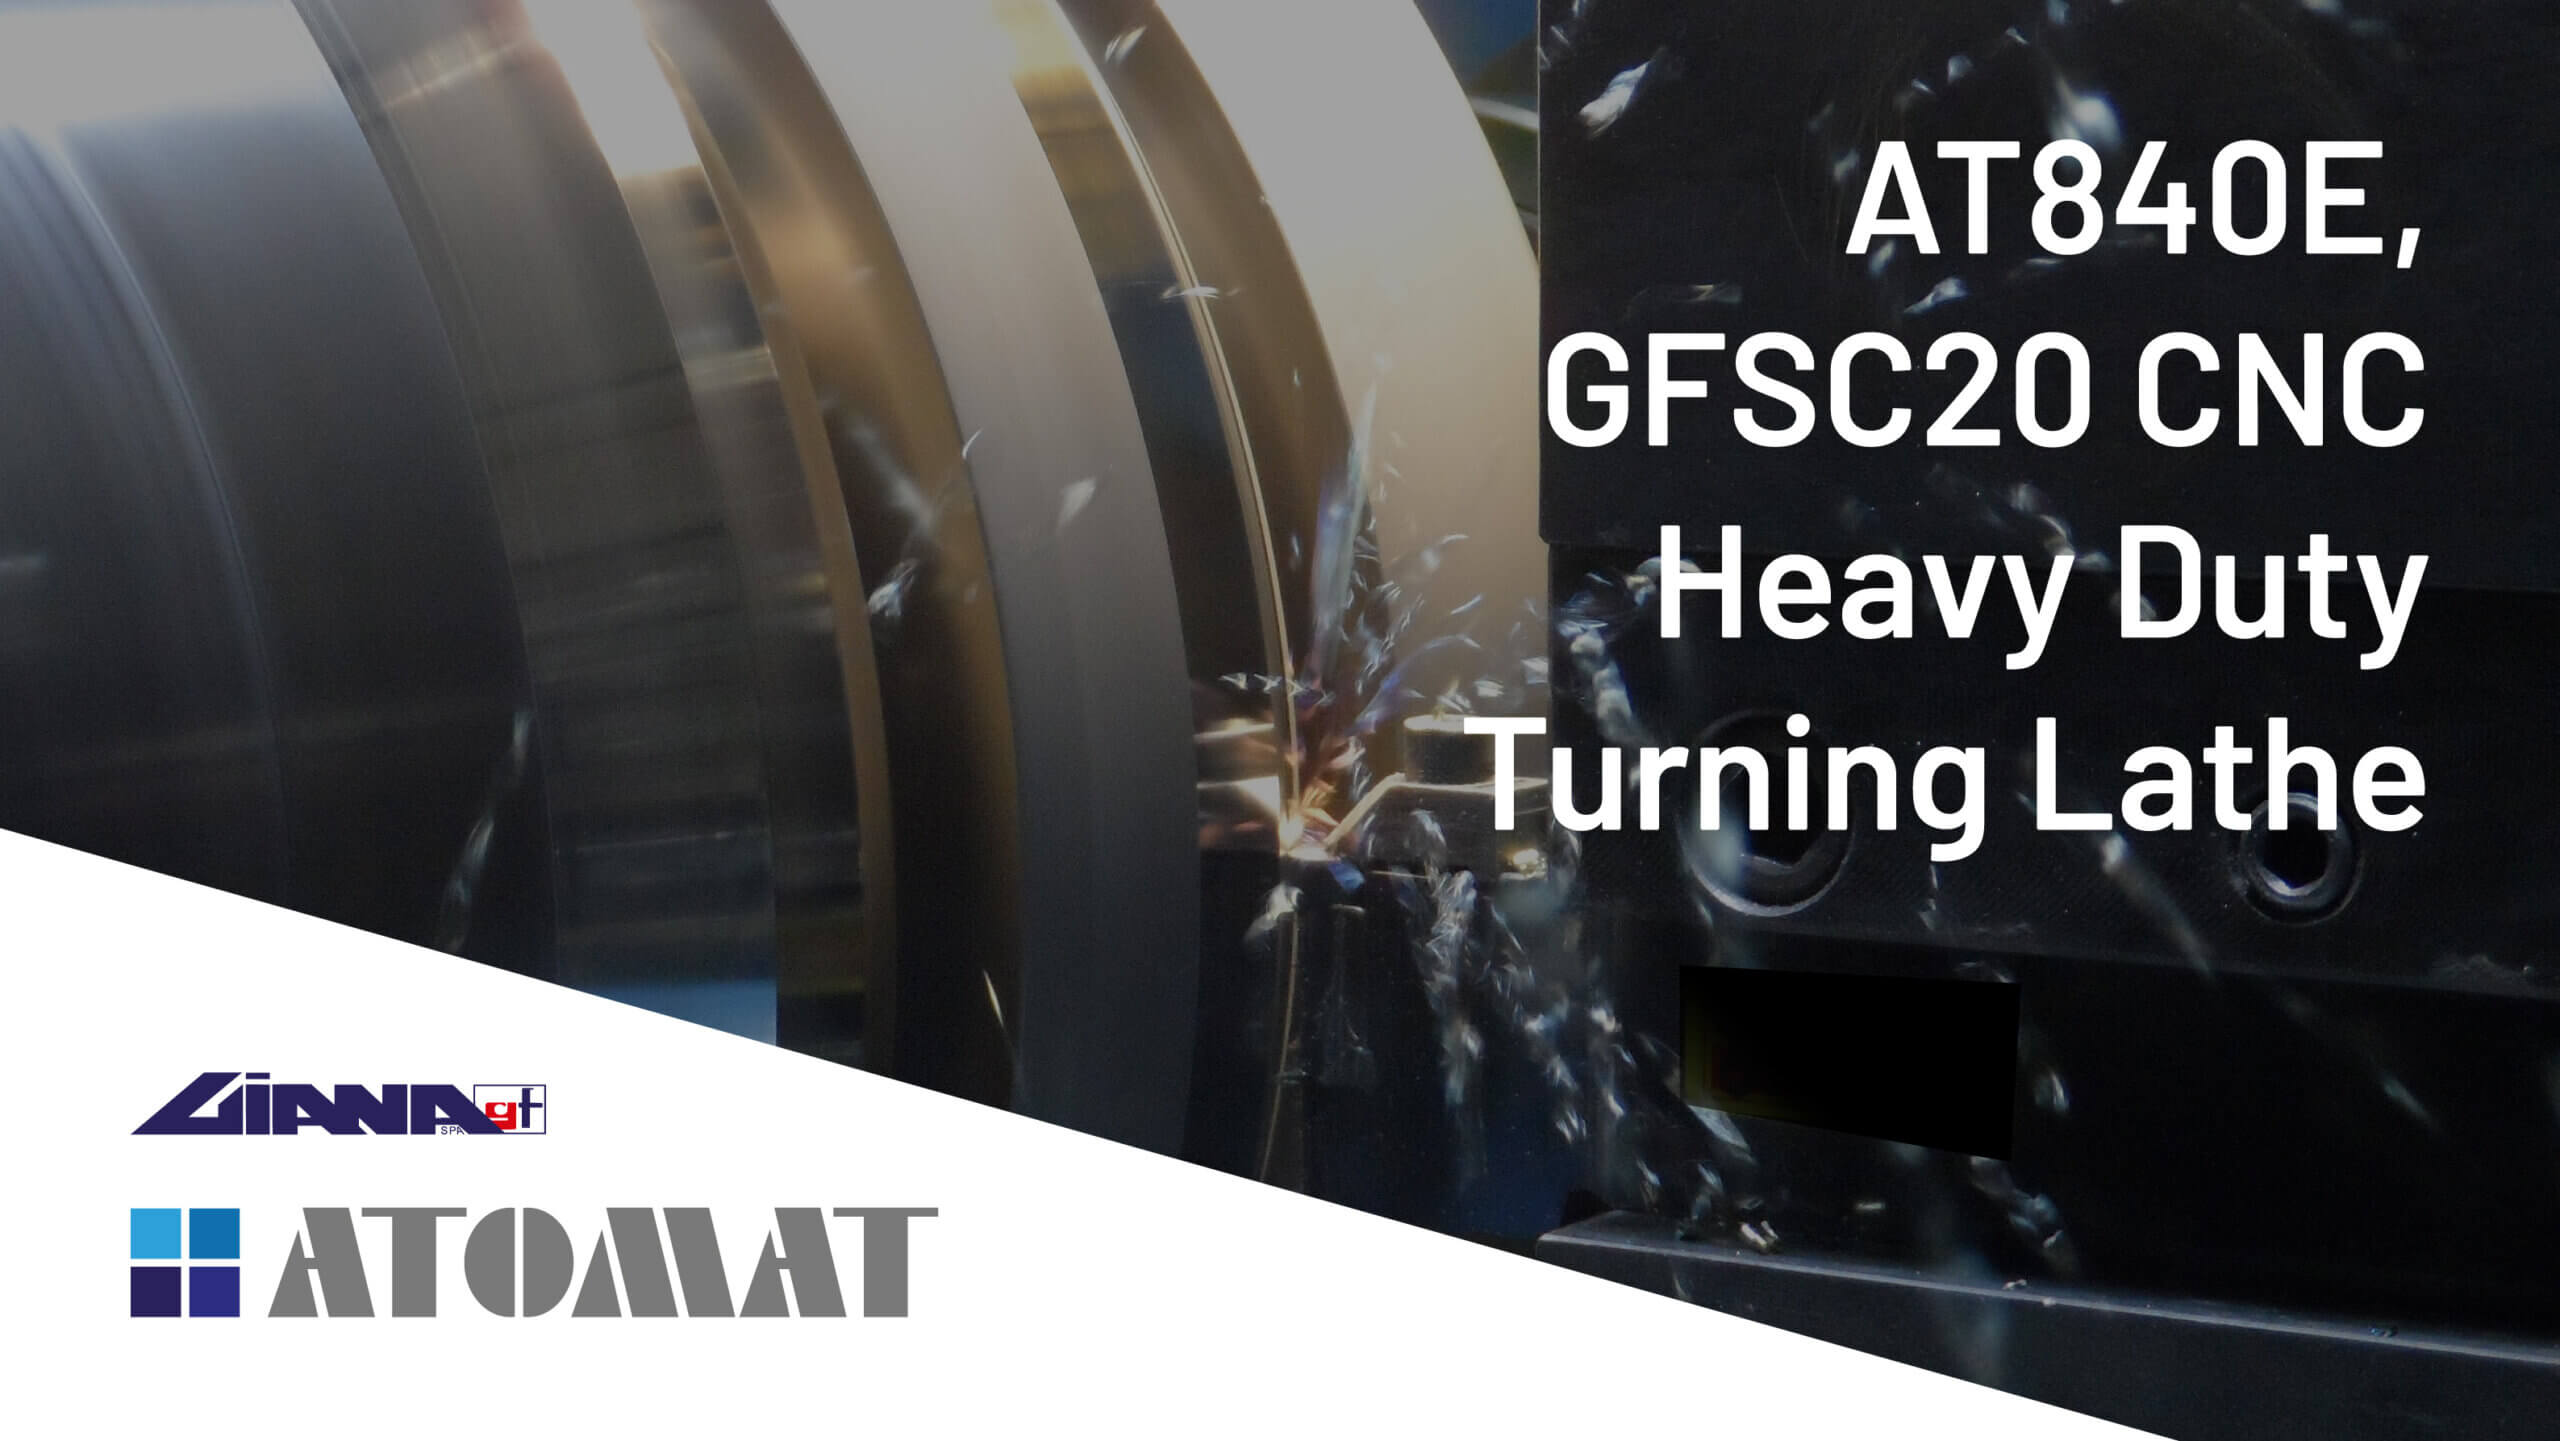 Atomat Spa & Giana SpA present the AT840E, GFSC20 CNC Heavy Duty Turning Lathe